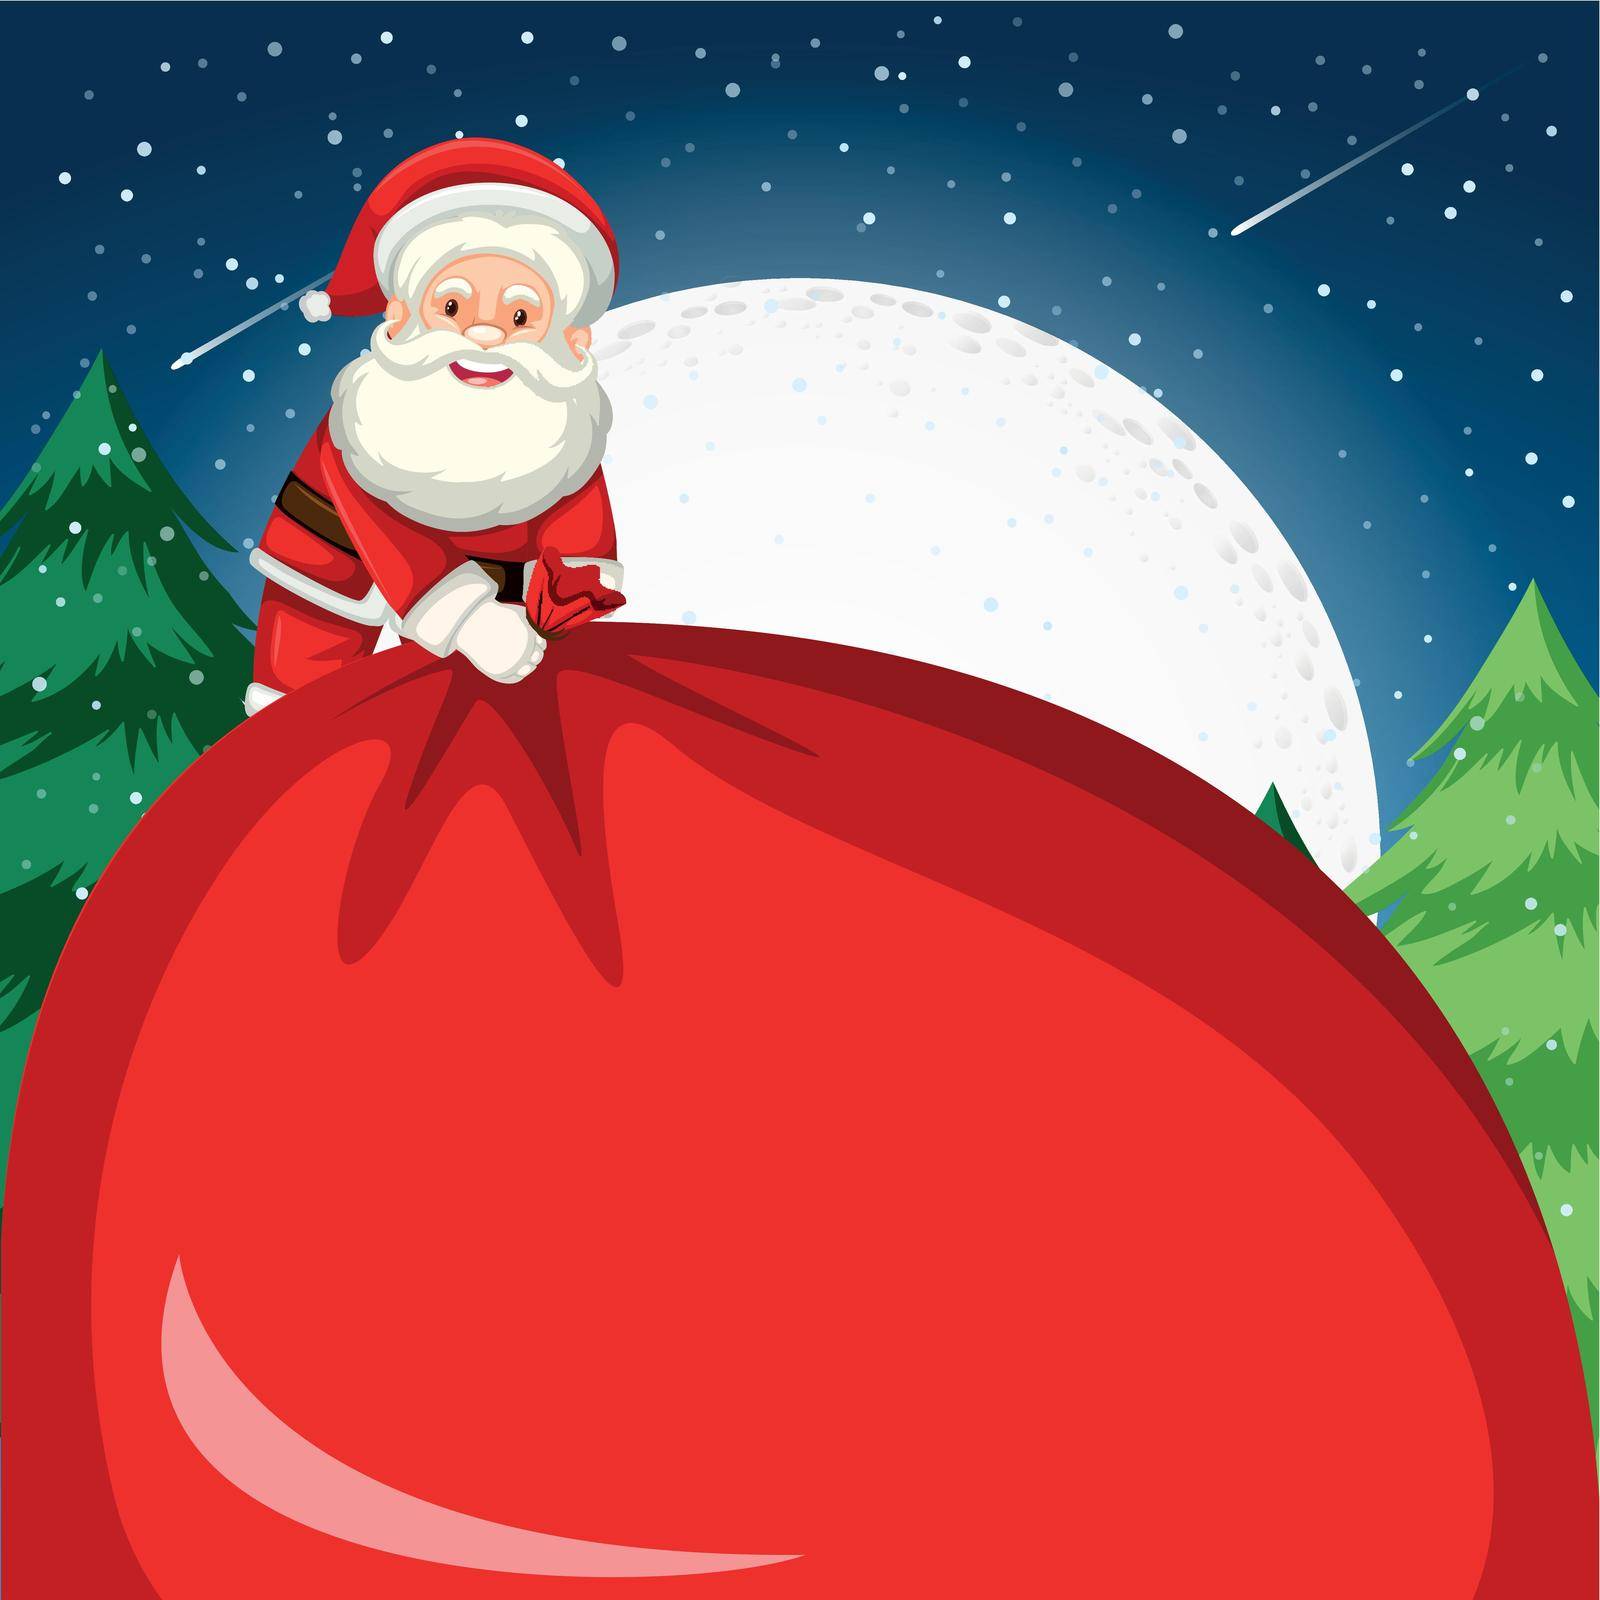 Santa holding a large sack illustration